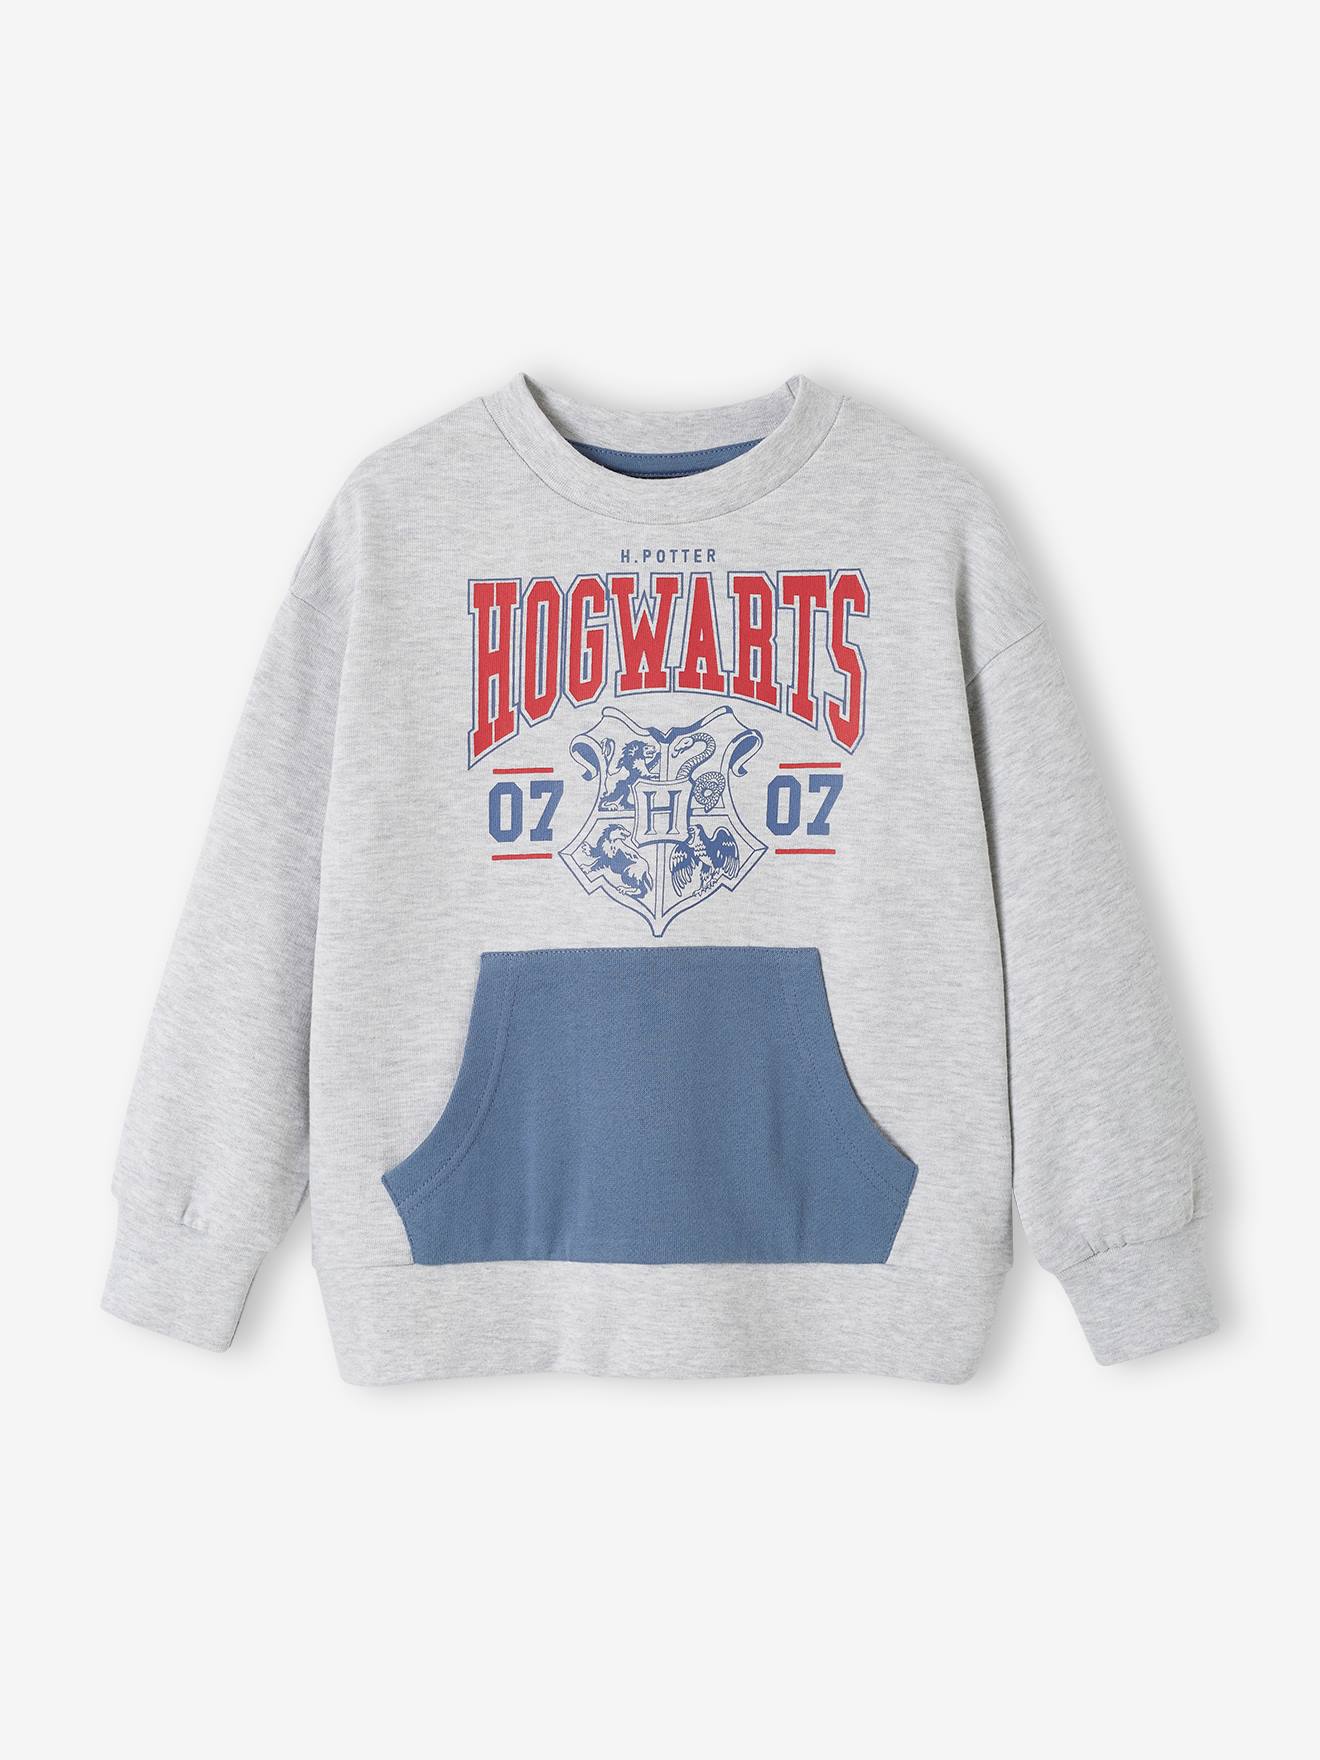 Harry Potter(r) Sweatshirt for Boys marl grey